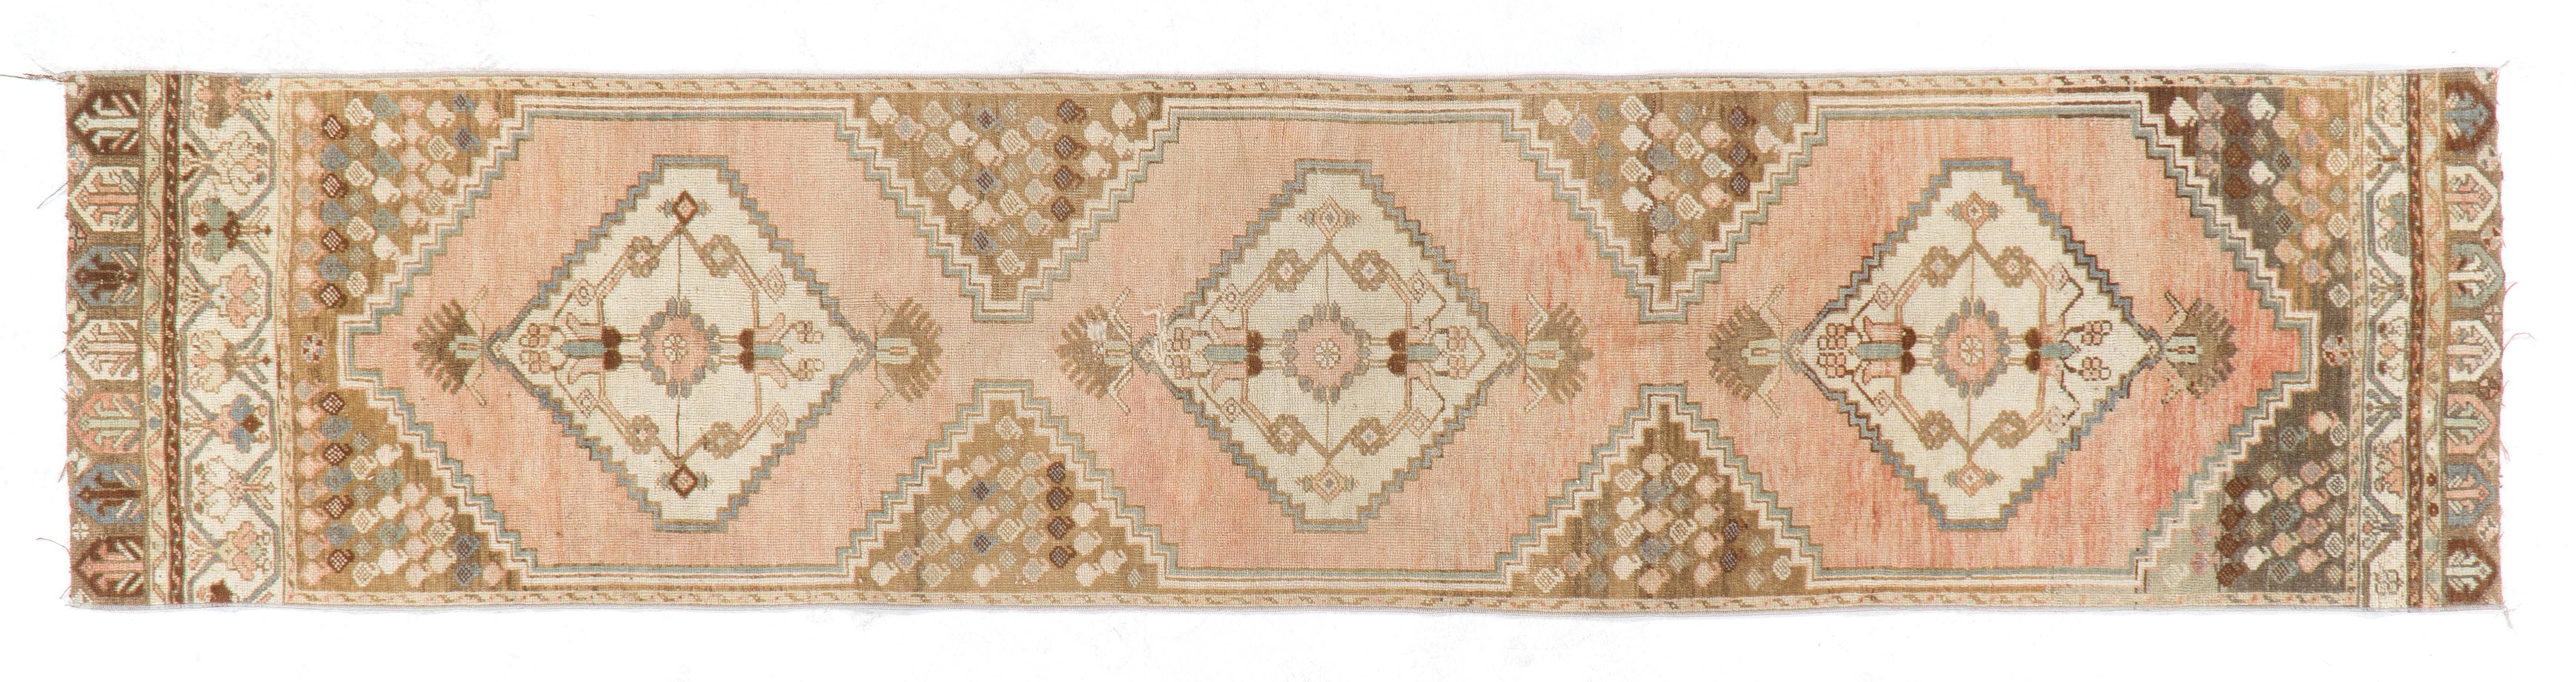 Hand-Knotted Narrow Vintage Anatolian Runner Rug, Wool Handmade Carpet for Hallway